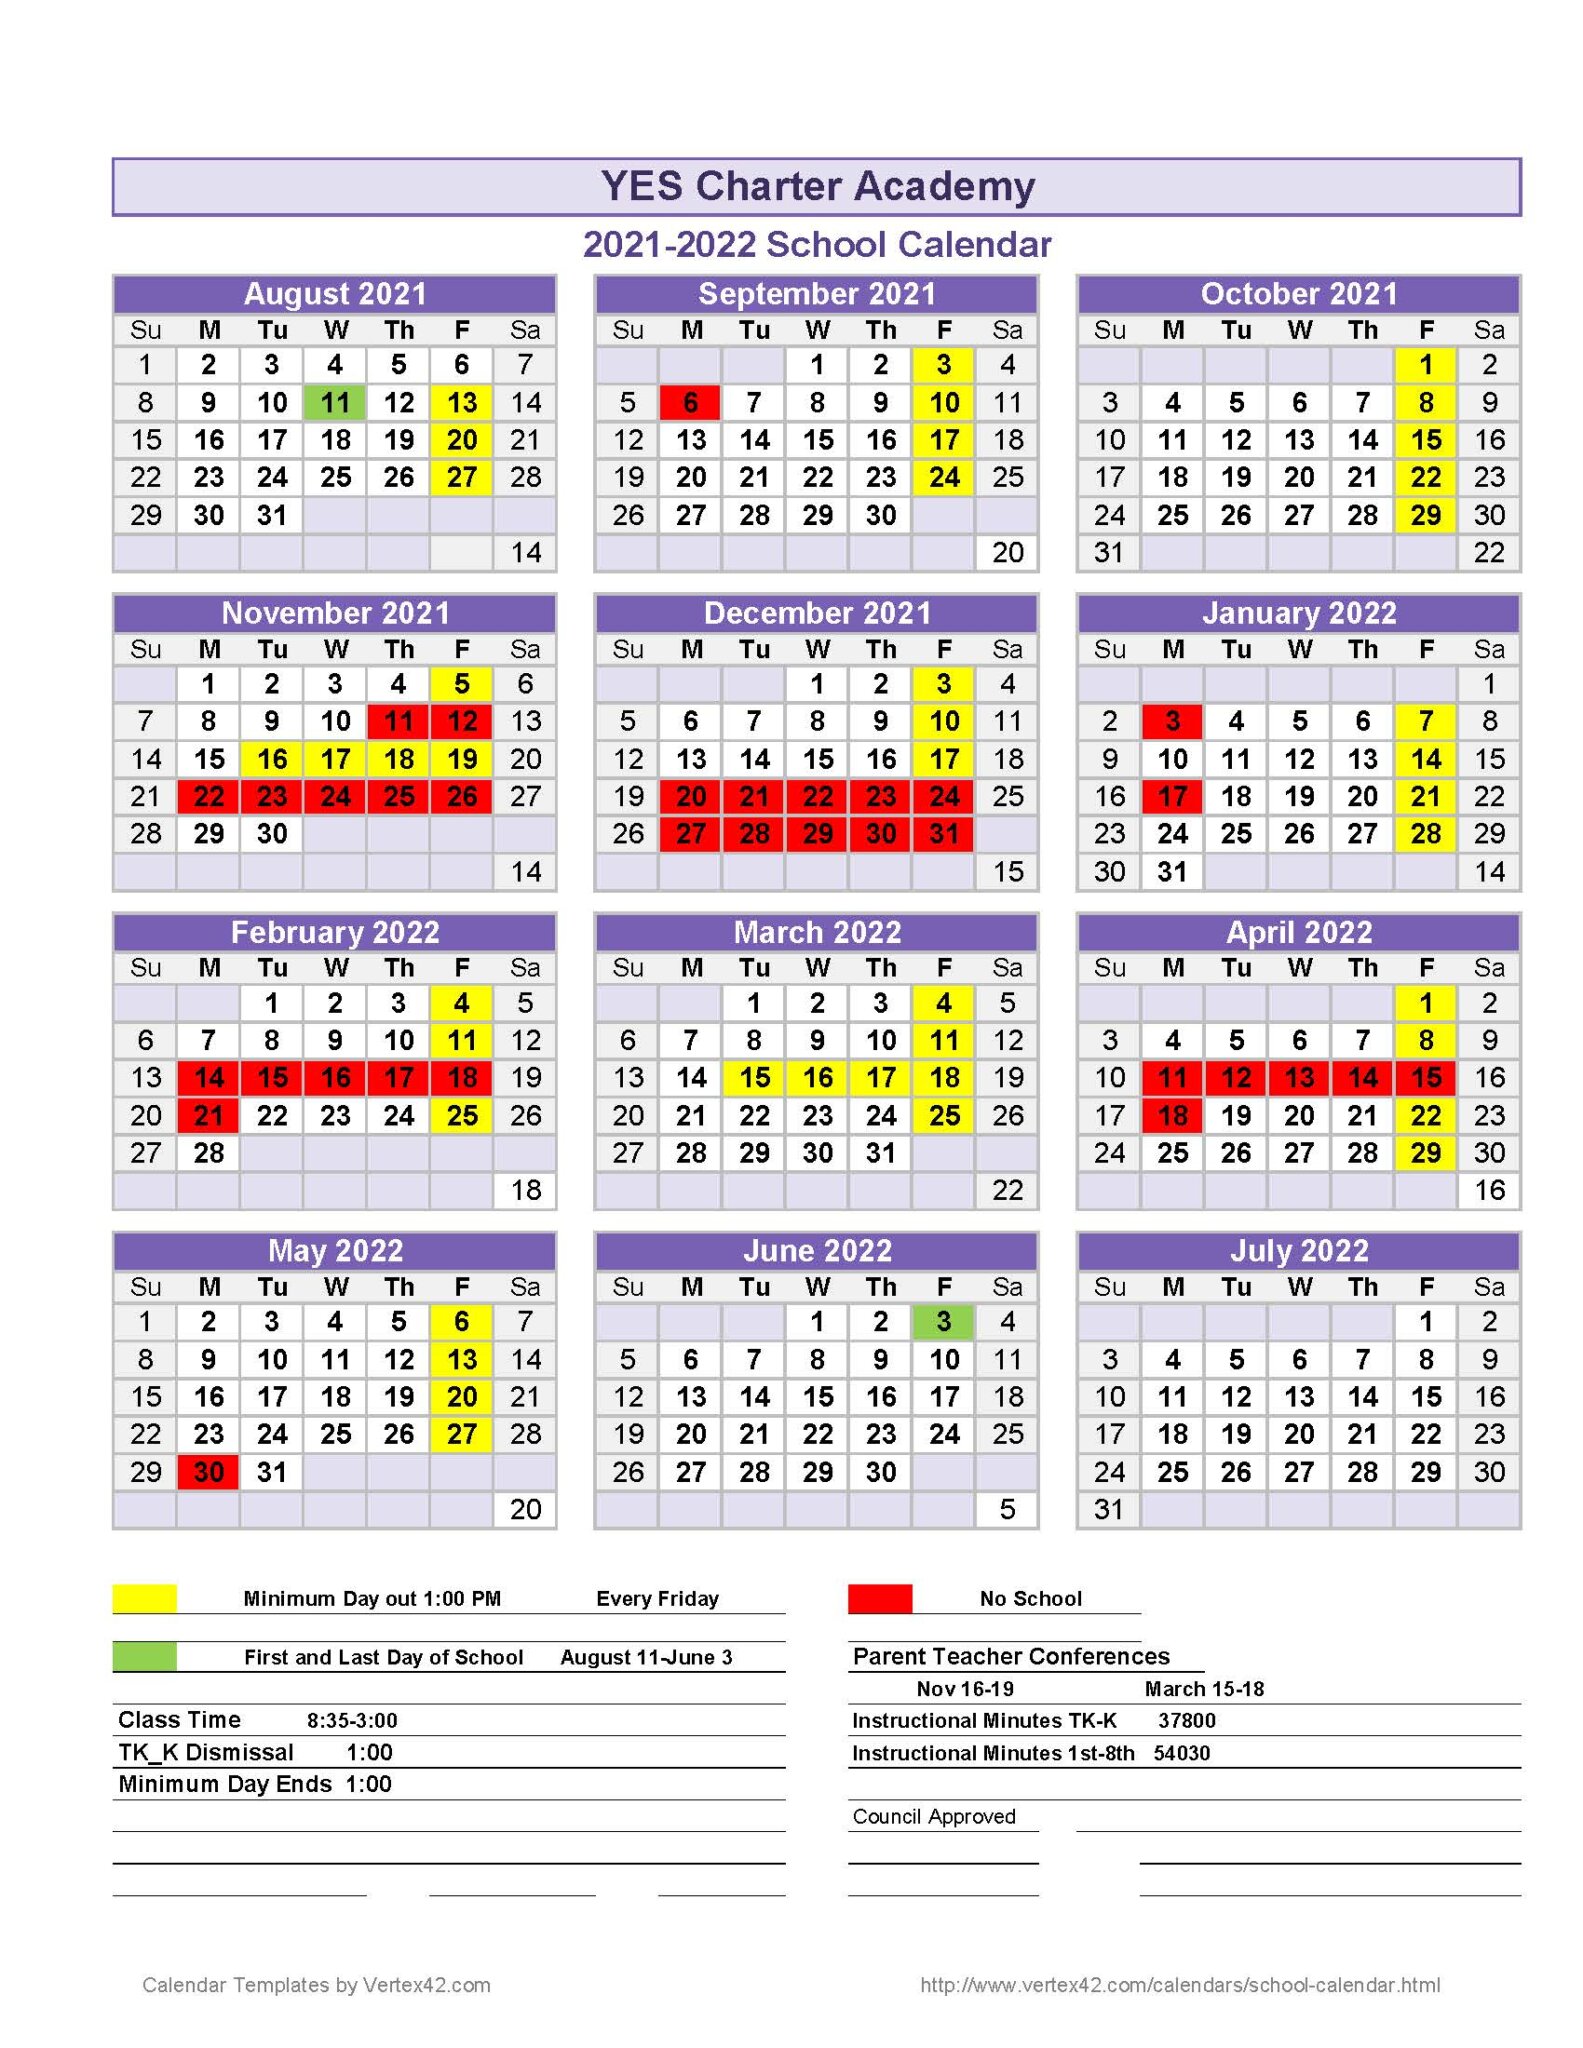 School Calendar YES Charter Academy